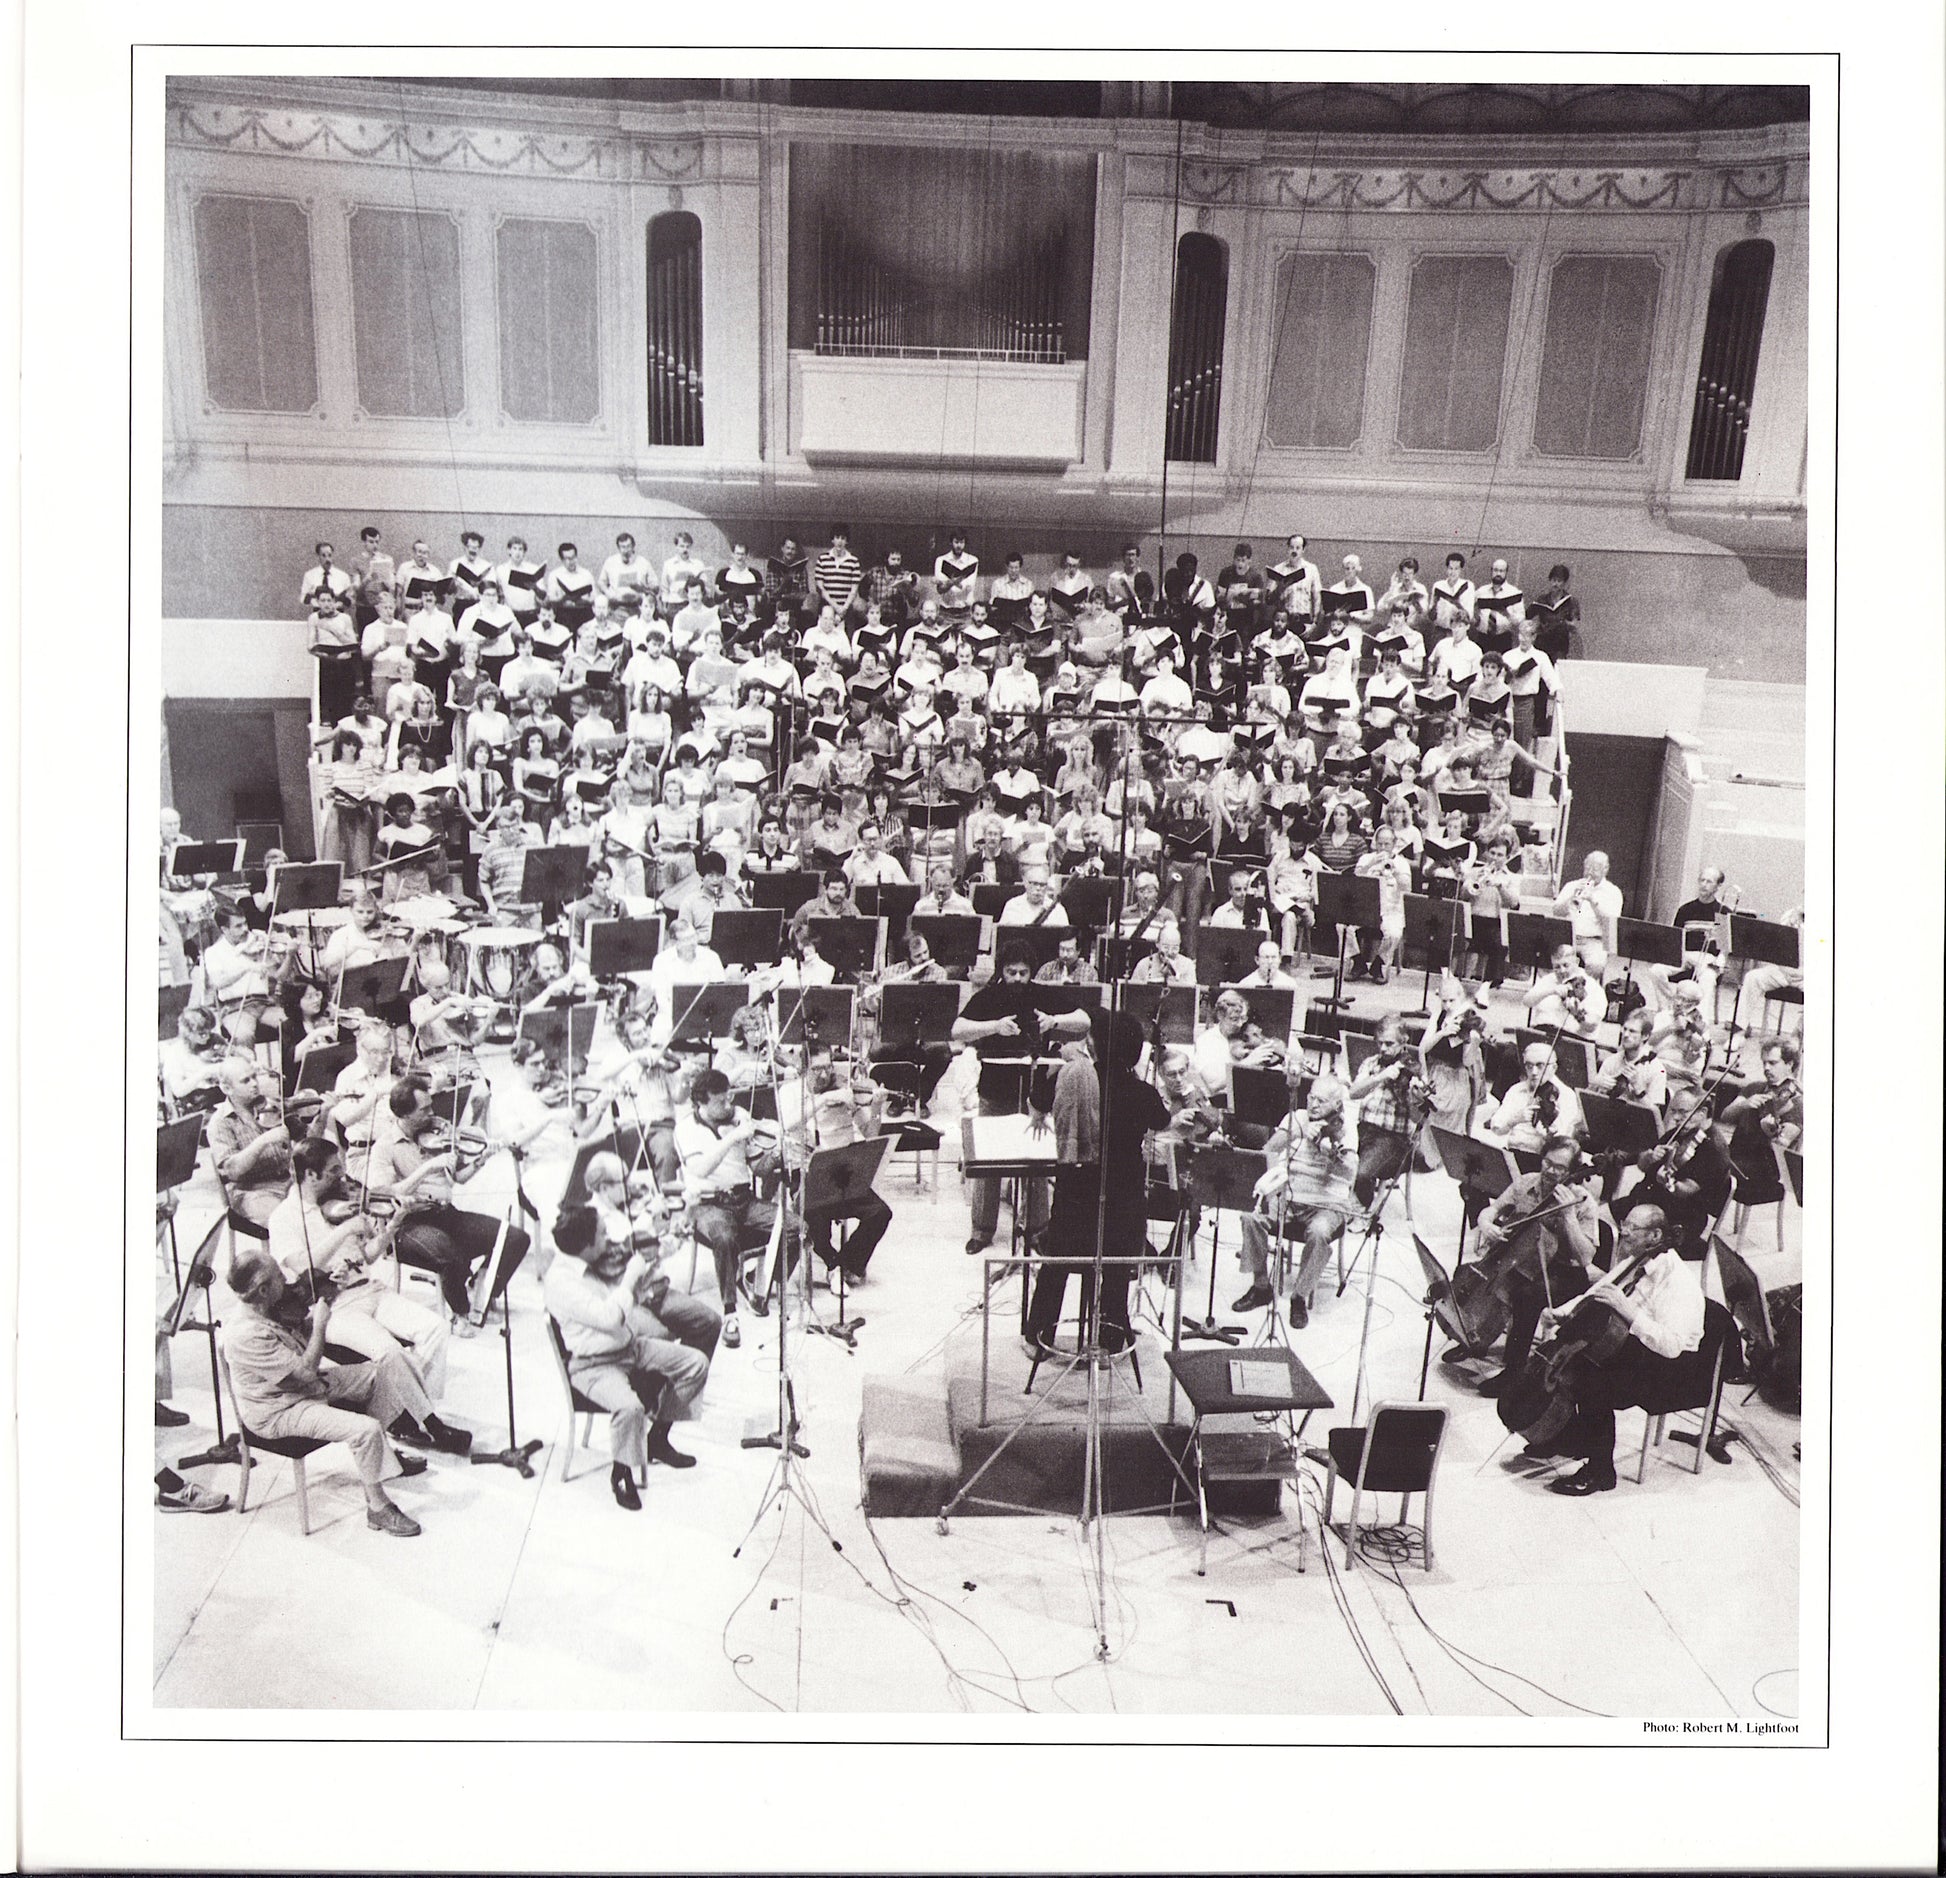 Orff - June Anderson · Bernd Weikl · Philip Creech, Chicago Symphony Chorus And Orchestra, James Levine - Carmina Burana Vinyl LP